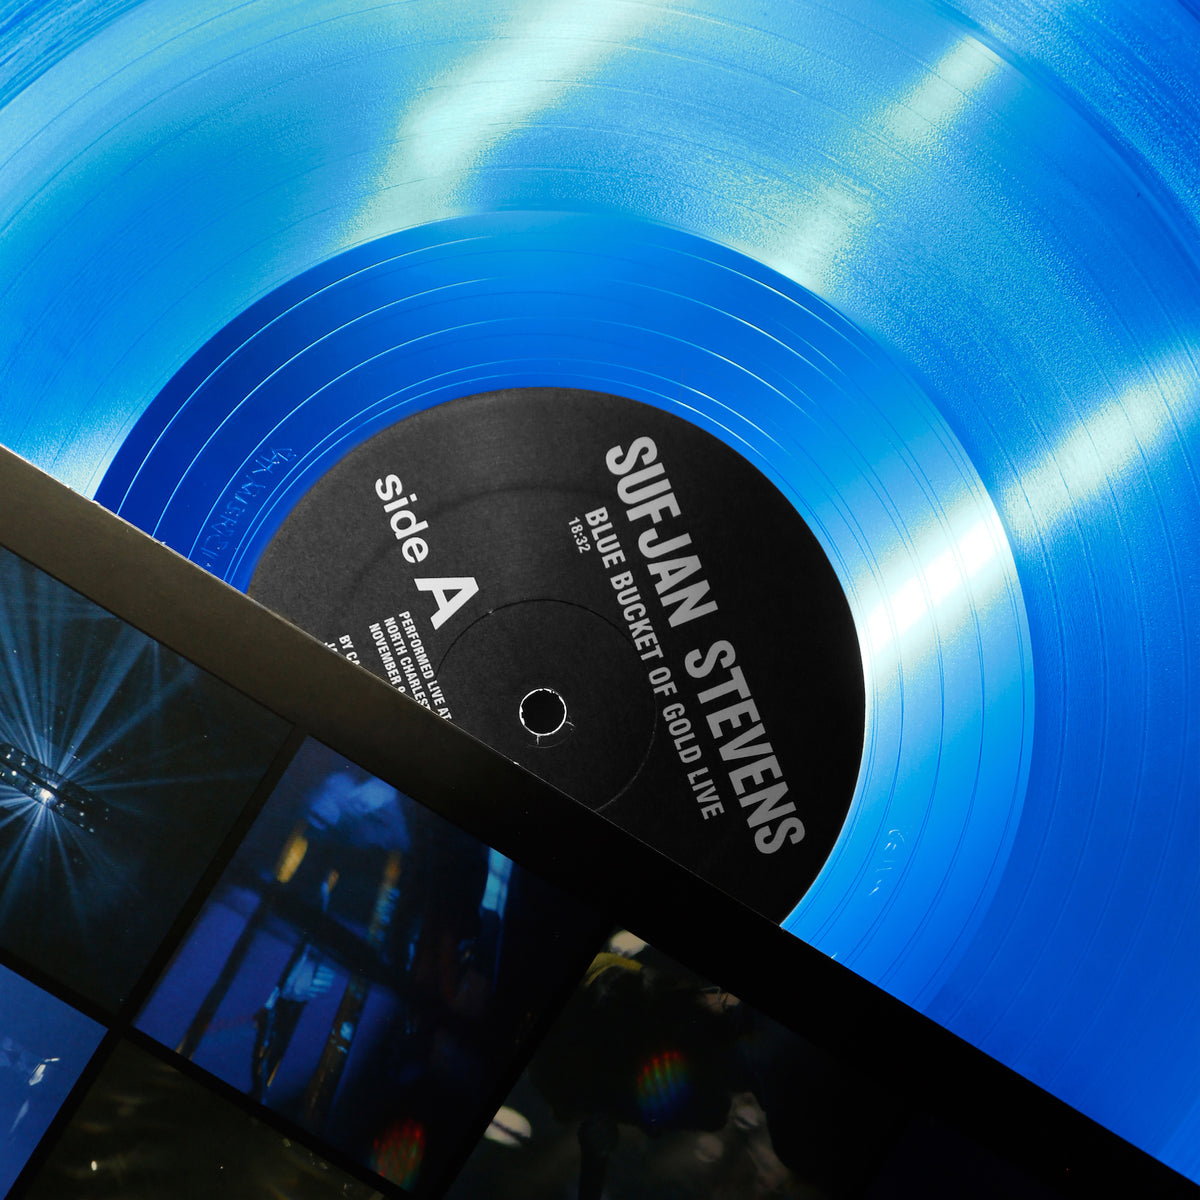 The Blinders Beholder Vinyl LP Due Out 01/03/24 — Assai Records